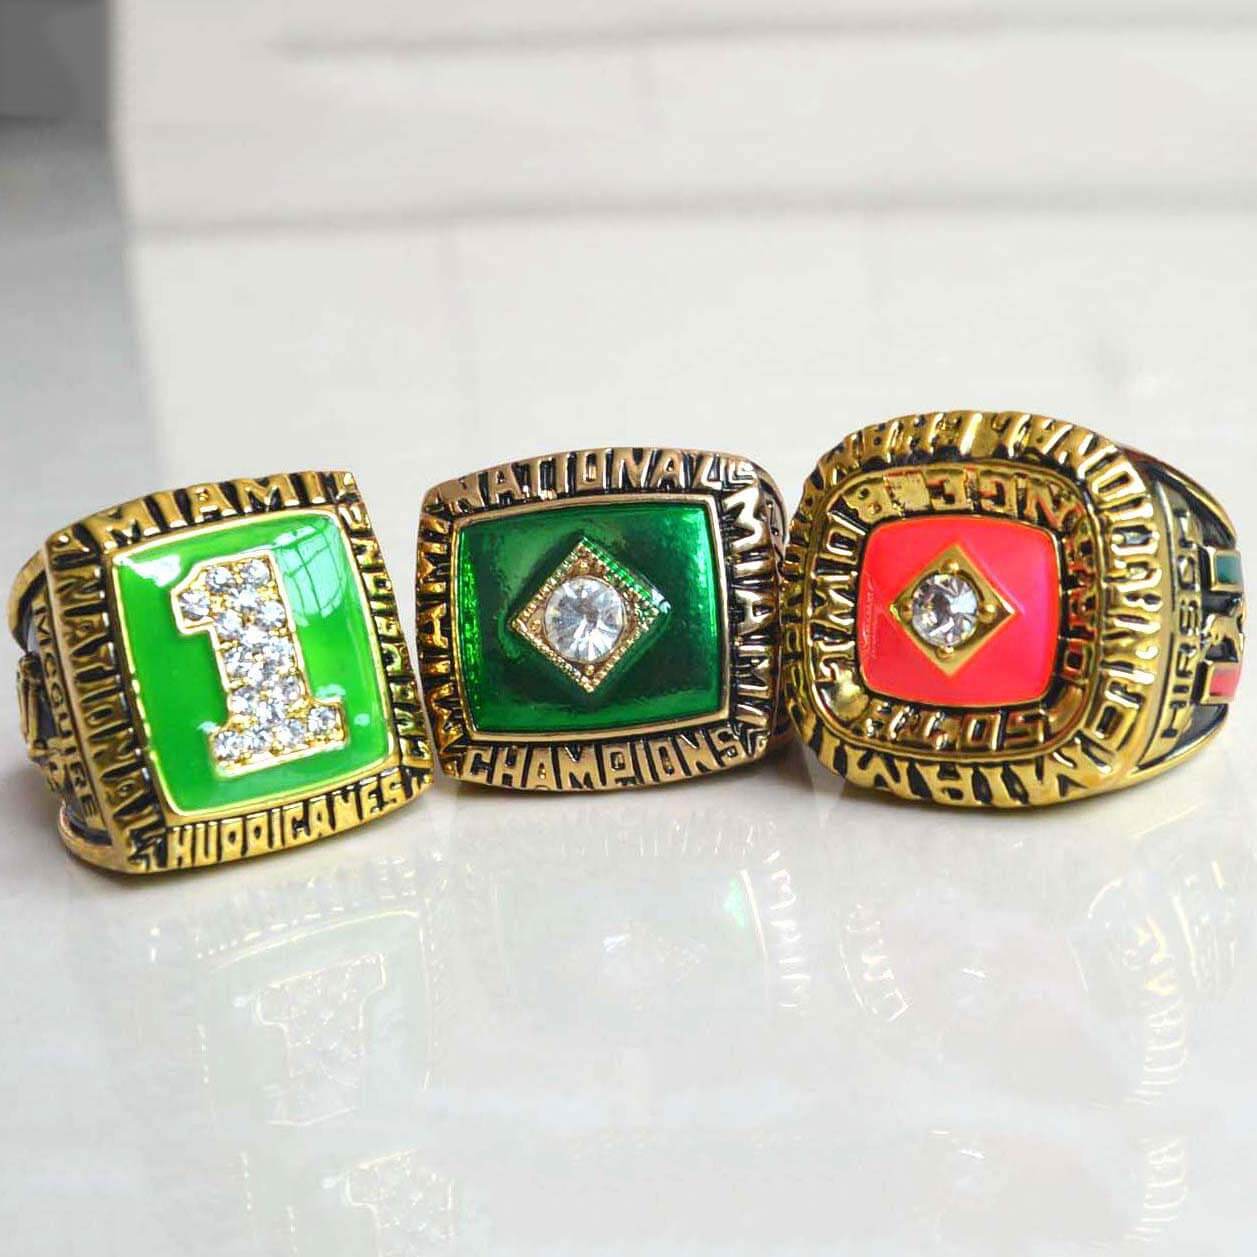 Miami Hurricanes 1983, 1987 & 1989 NCAA championship ring collection